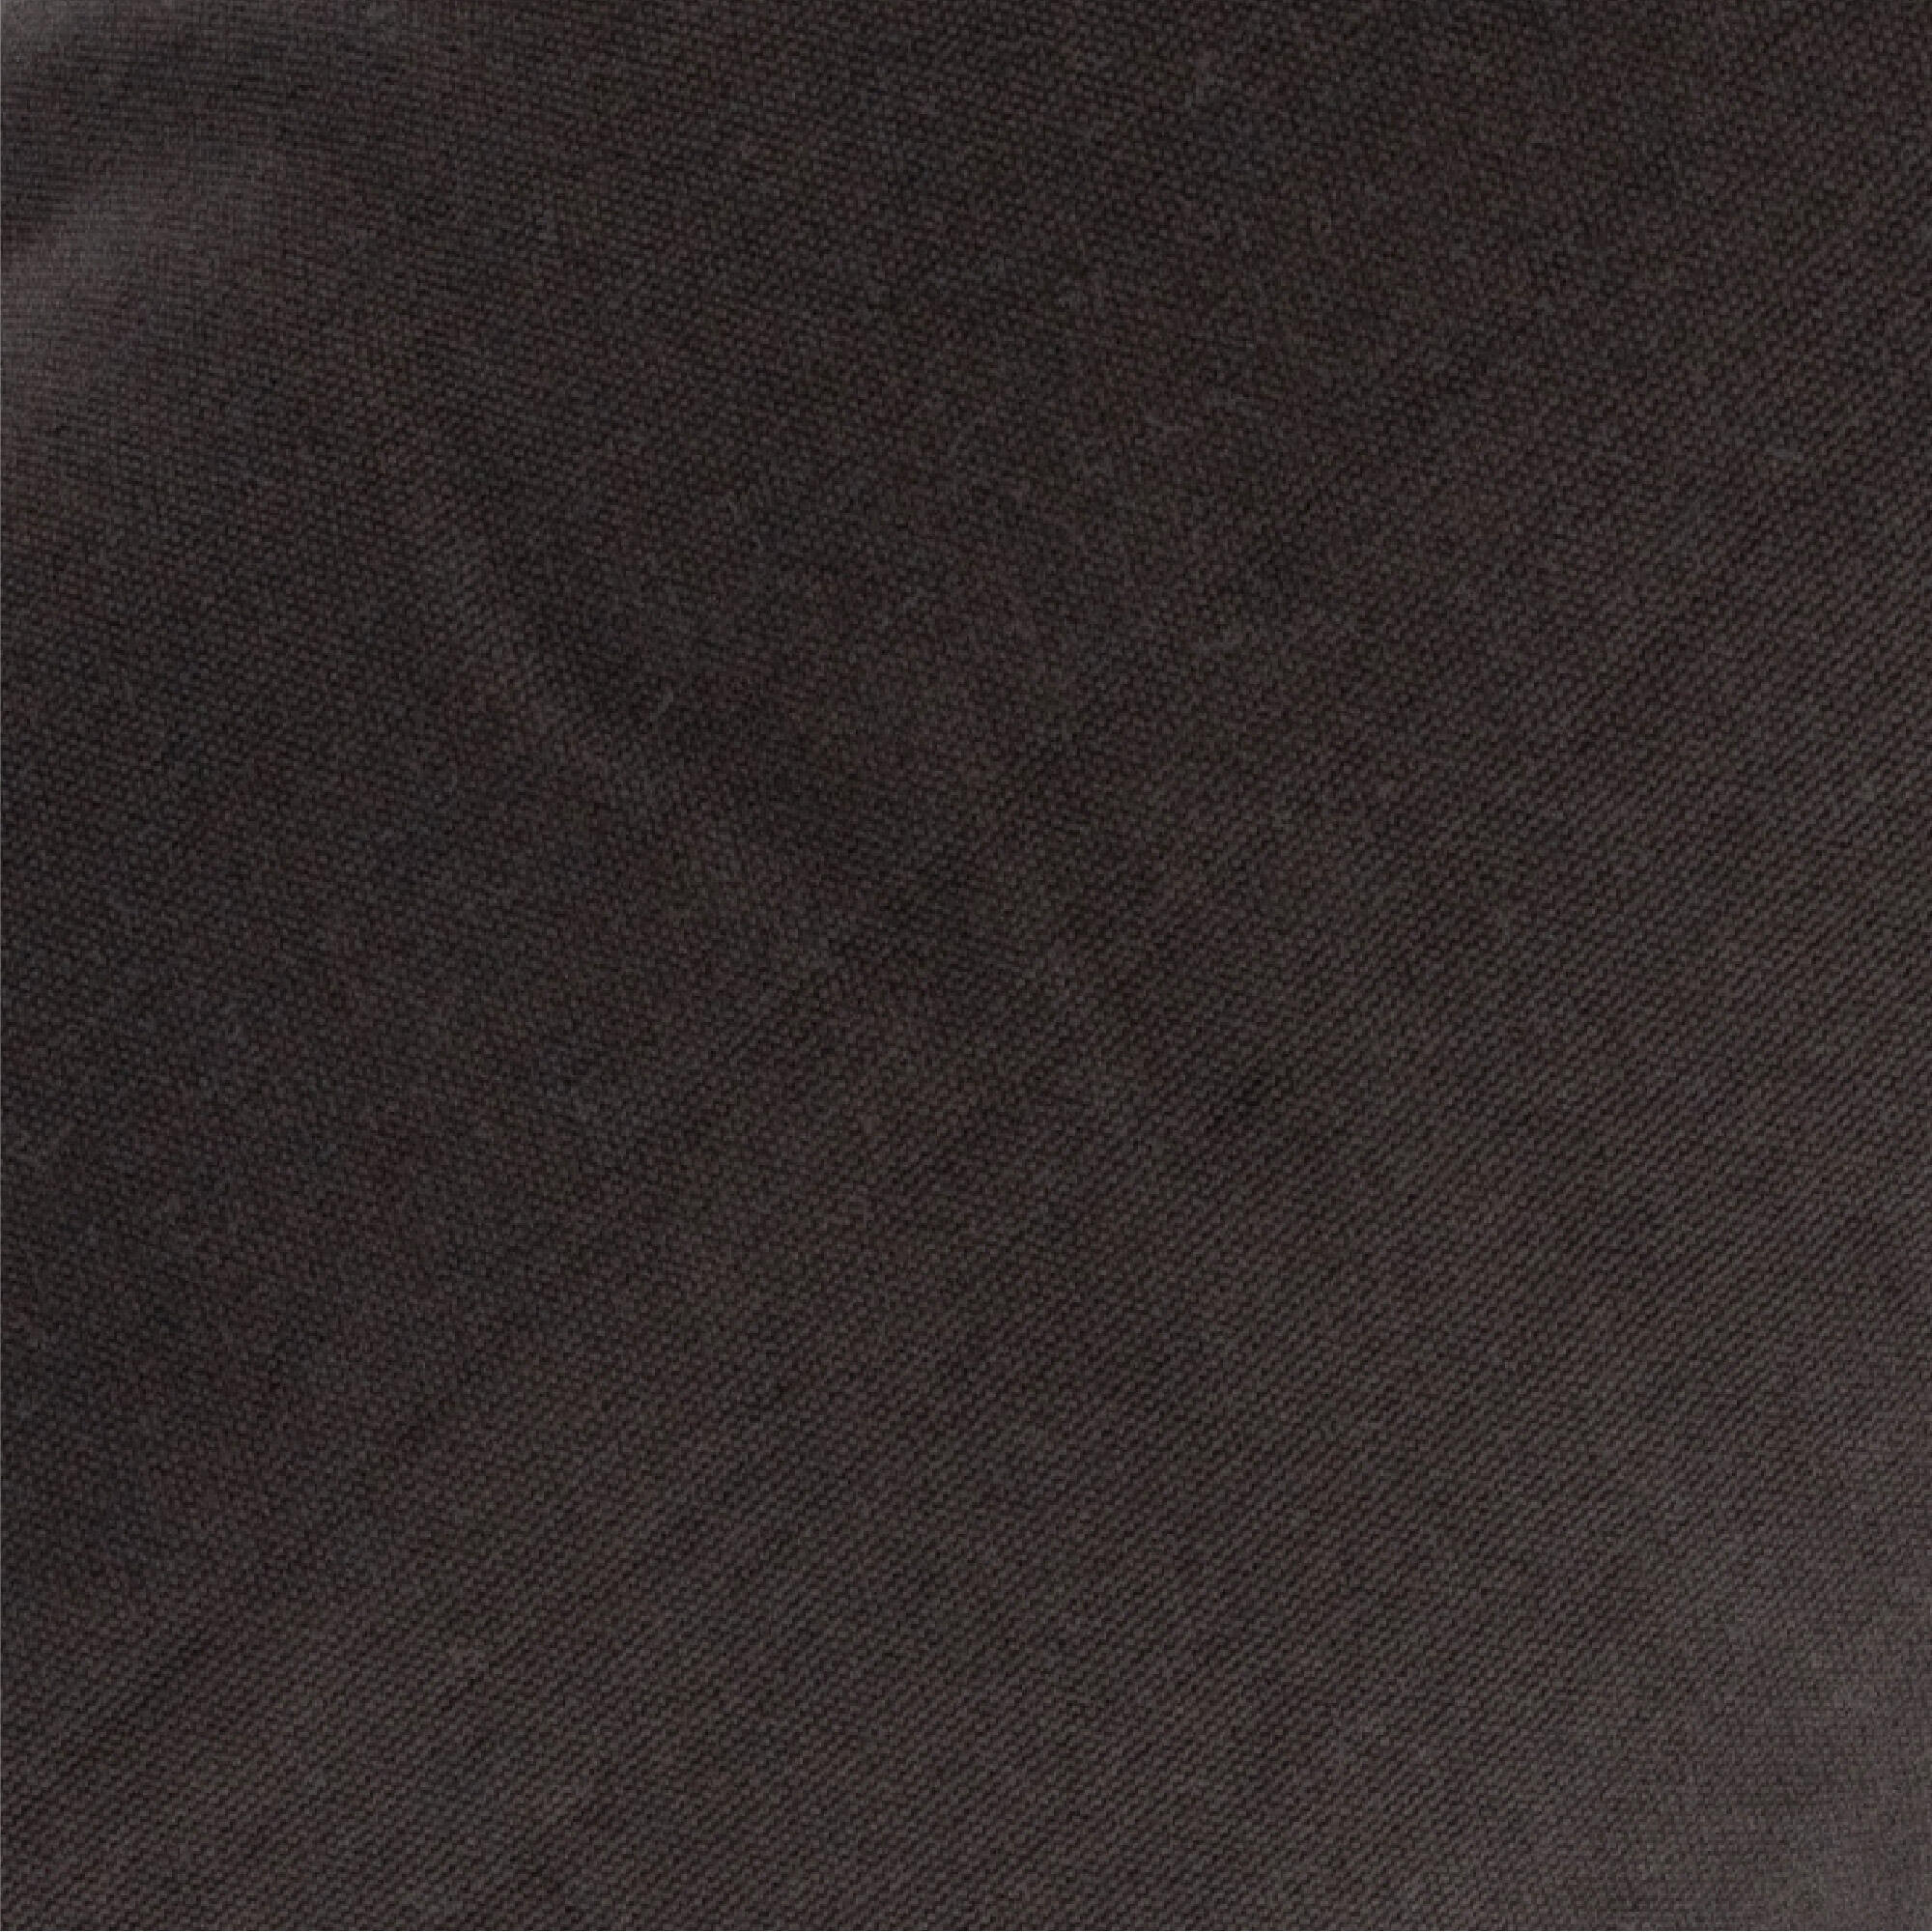 Myga Support Bolster Pillow - Black 7/8